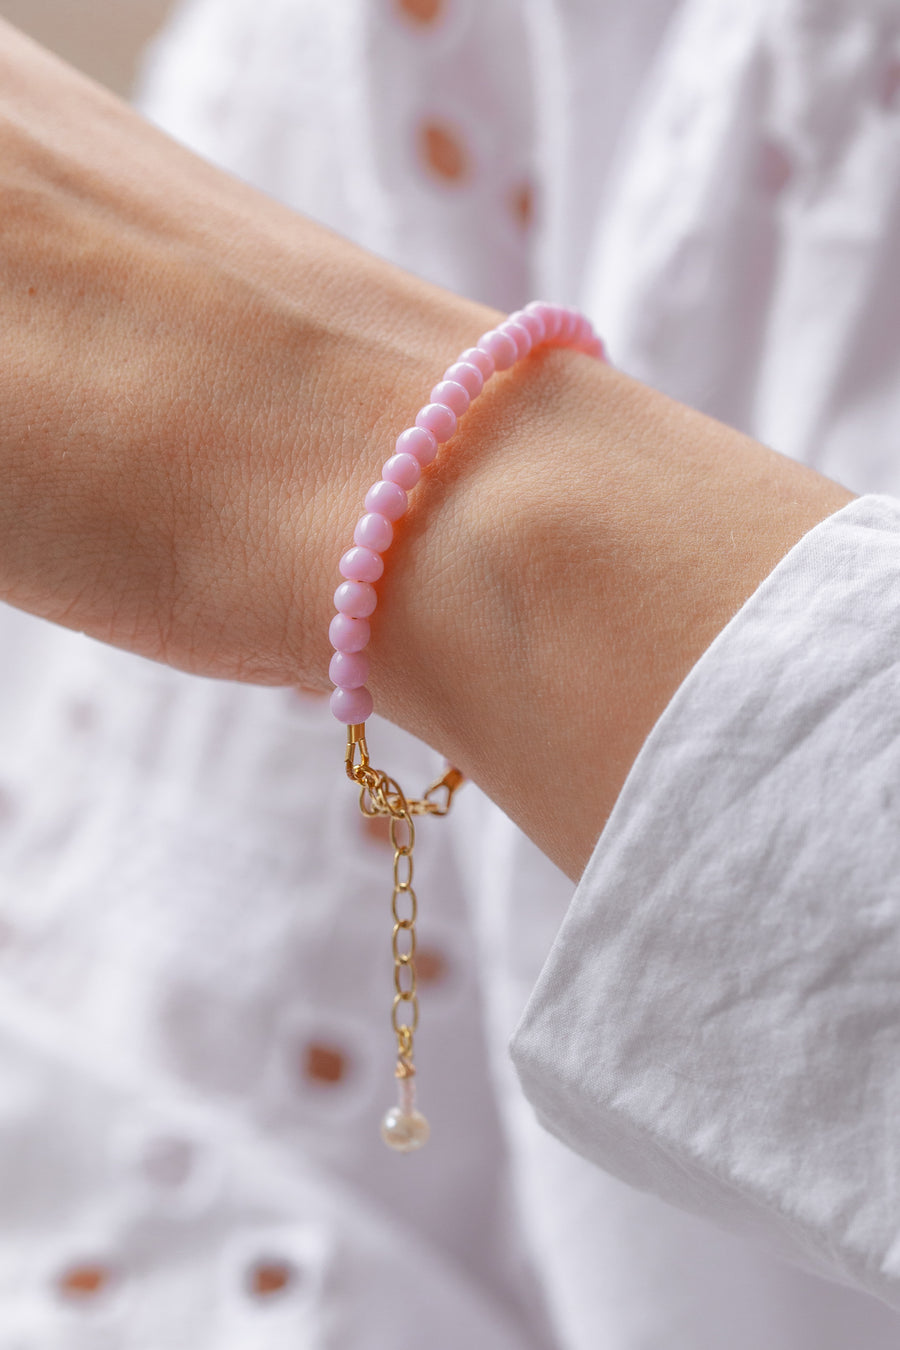 Bubblegum Pink Bracelet